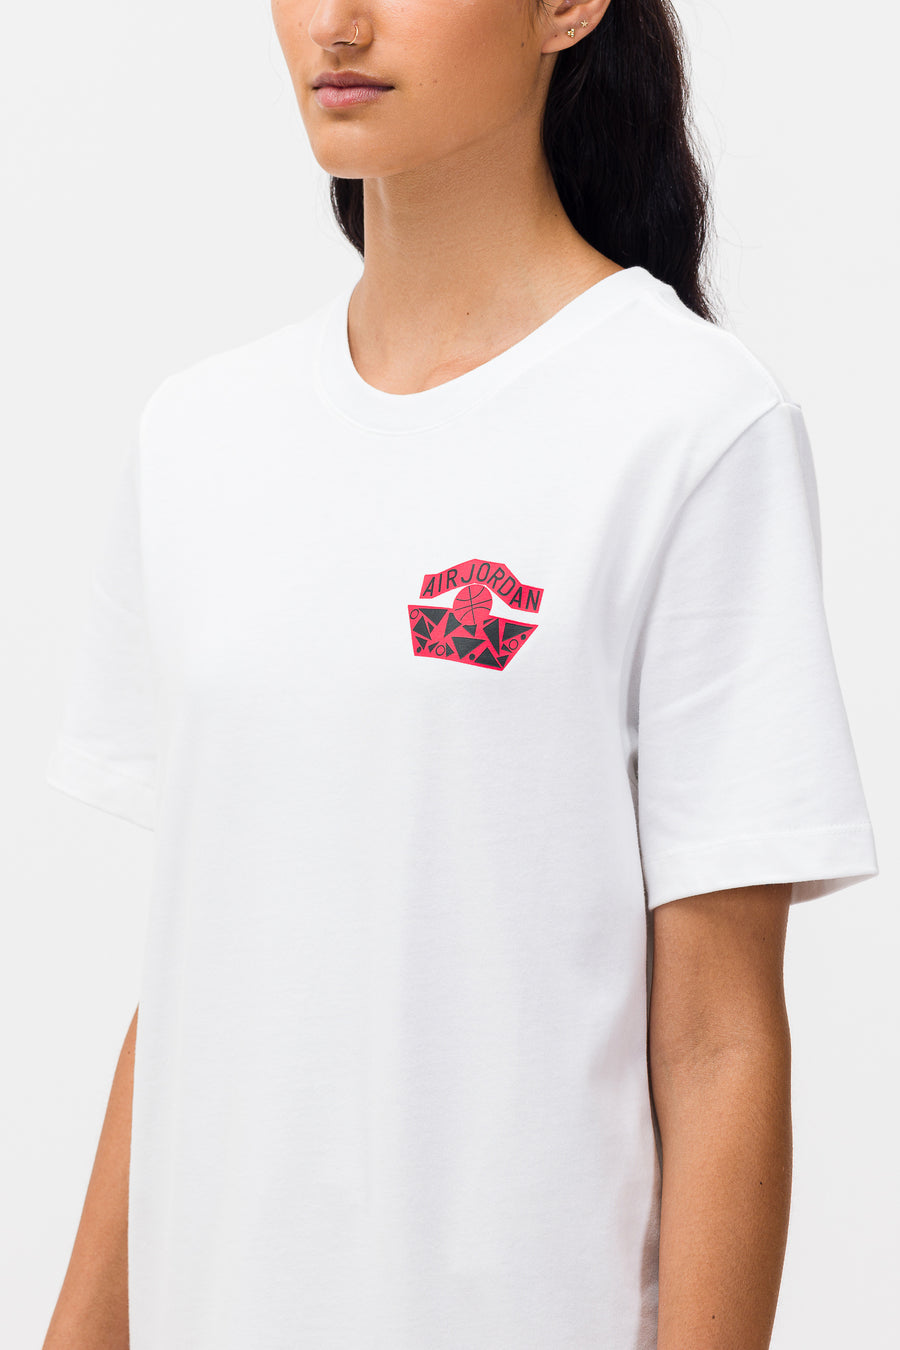 La Moor Chanel Graphic T-Shirt - Black Small